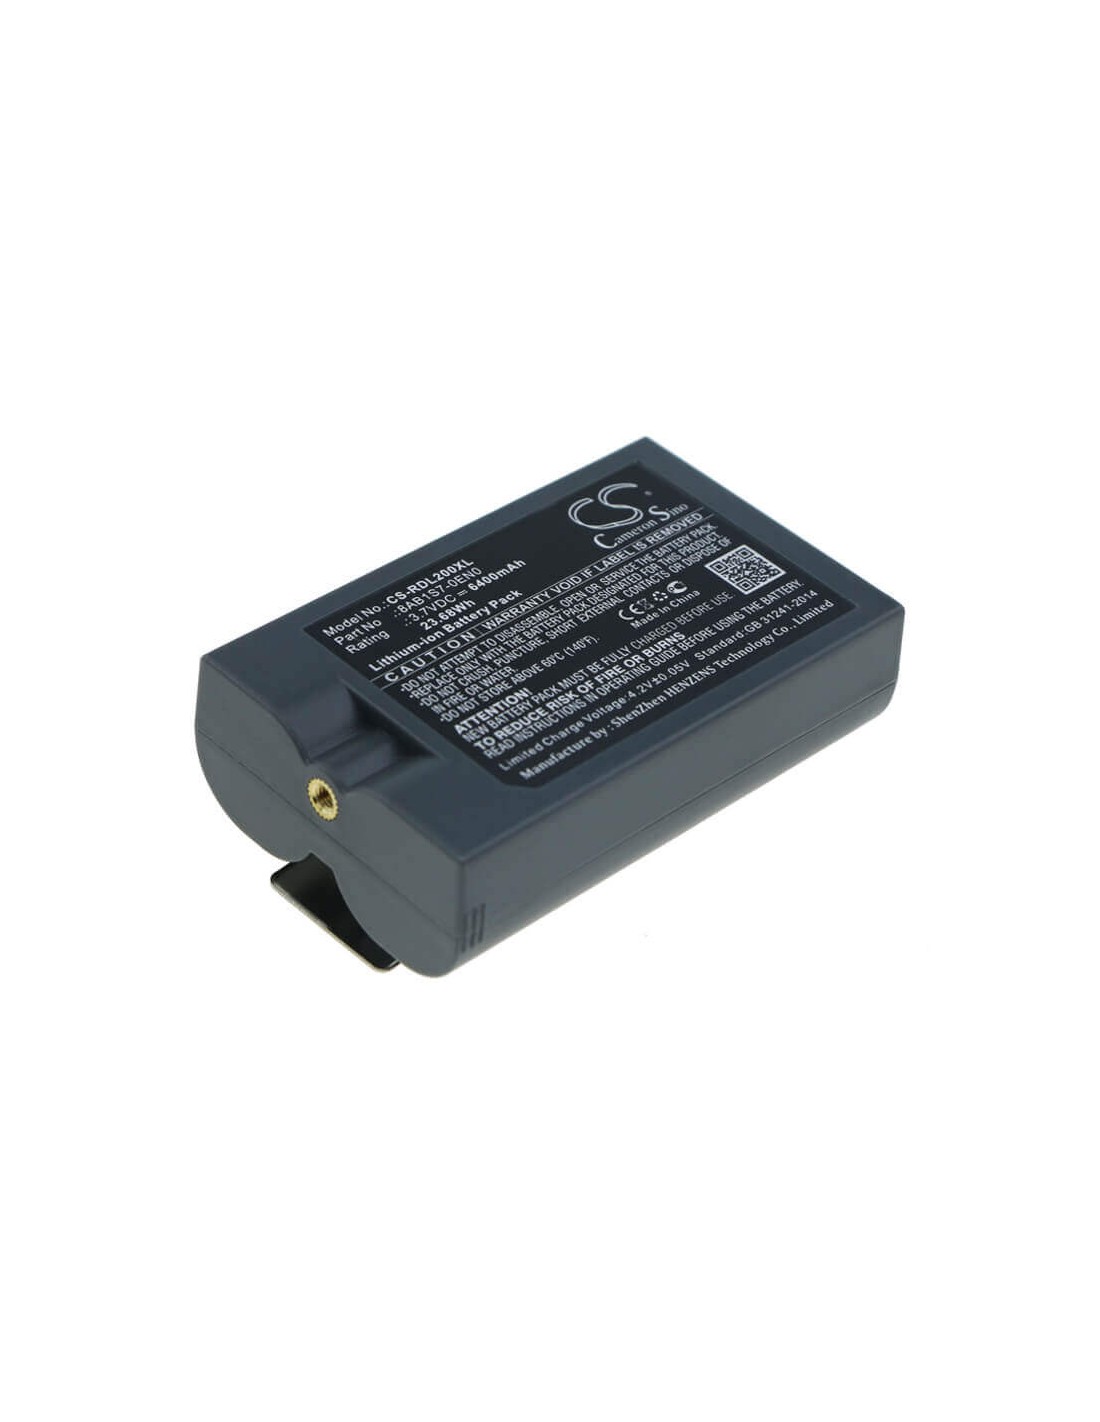 Battery for Ring, 8vr1s7, Spotlight Cam, Video Doorbell 2 3.7V, 6400mAh - 23.68Wh